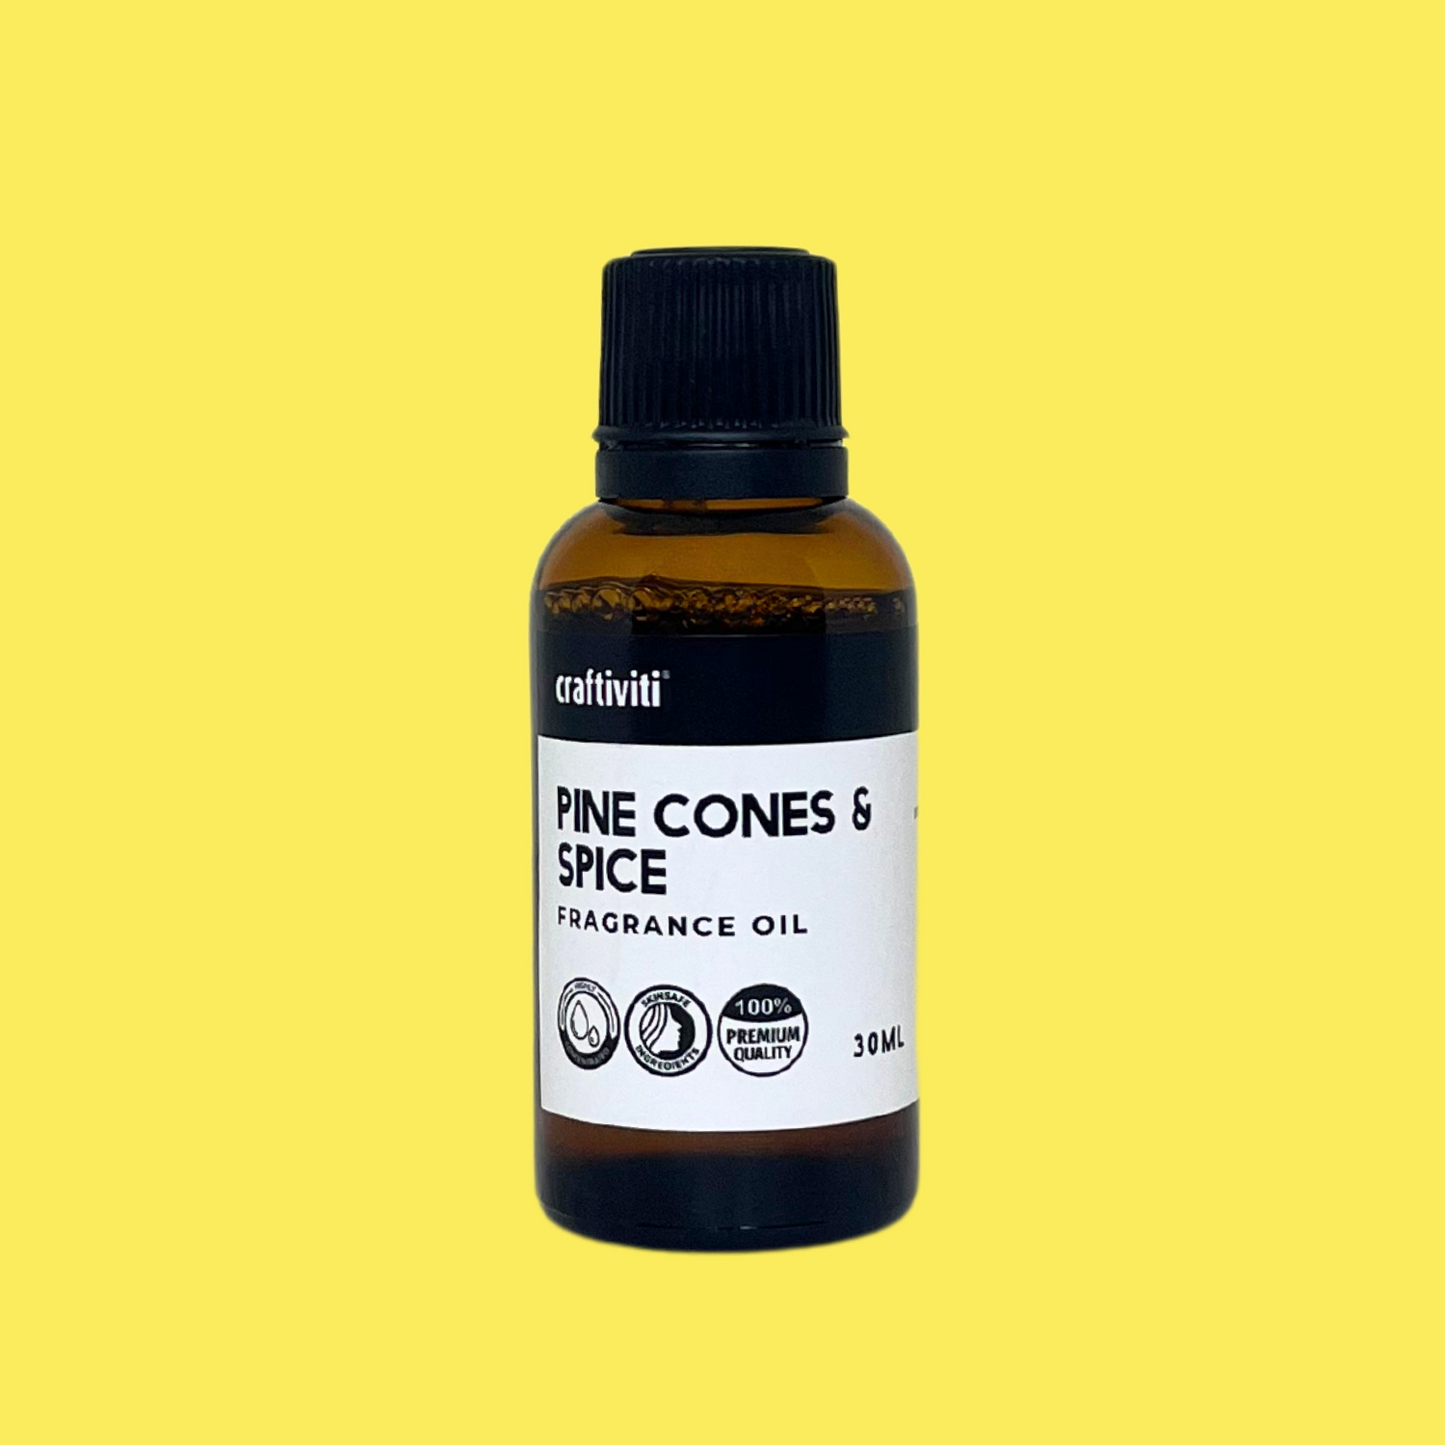 Pine Cones & Spice Fragrance Oil